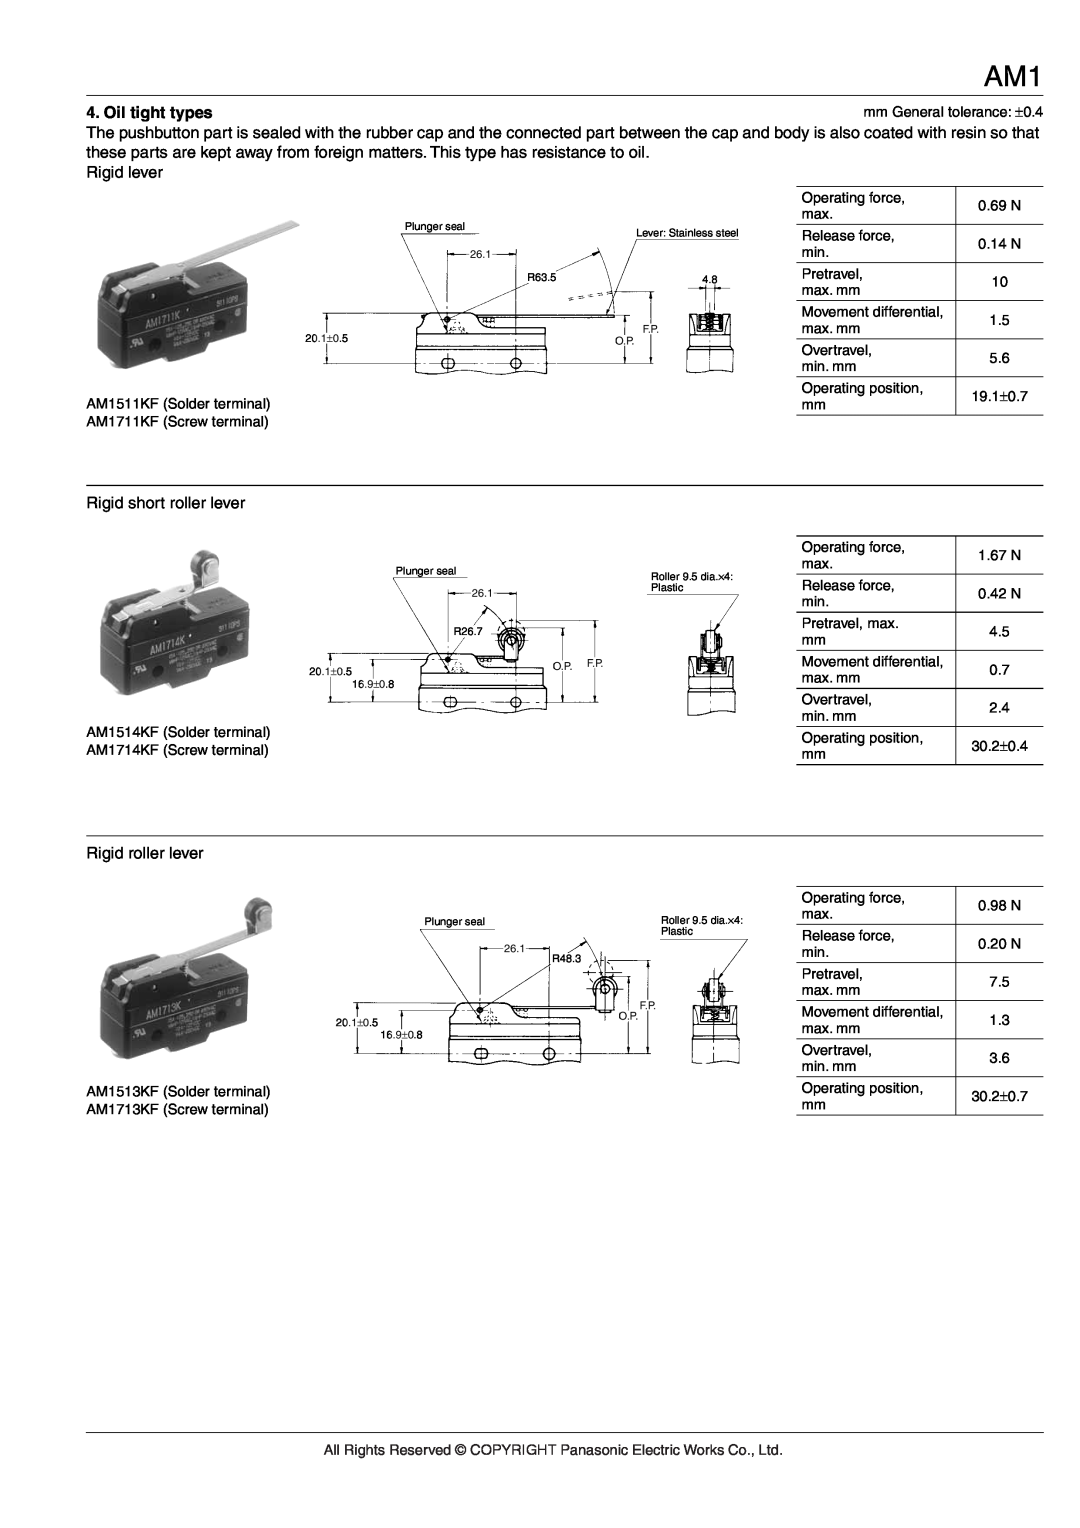 Panasonic AM1 (NZ BASIC) specifications Oil tight types, Rigid lever, Rigid short roller lever, Rigid roller lever 